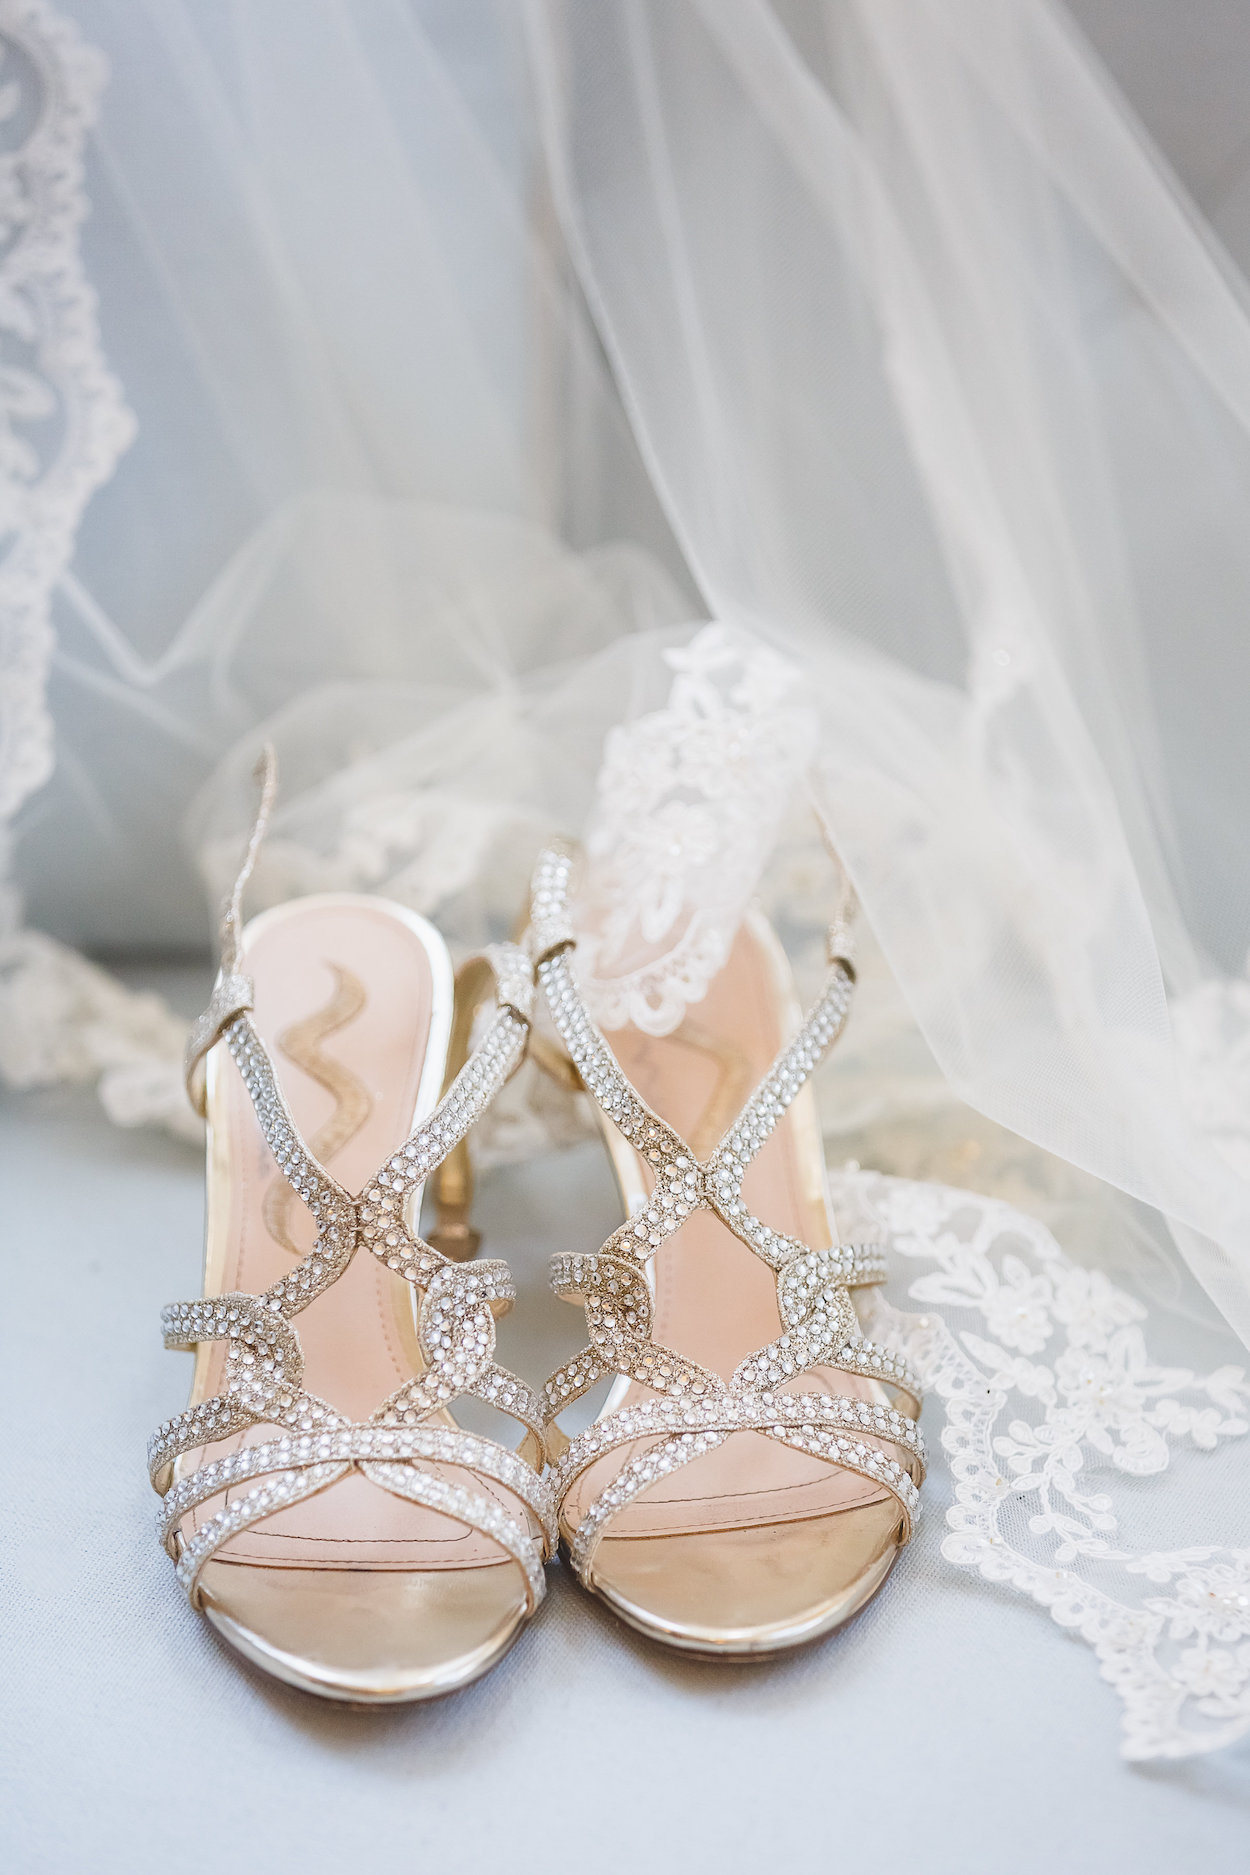 Silver Wedding Shoes - Science Museum of Virginia Wedding